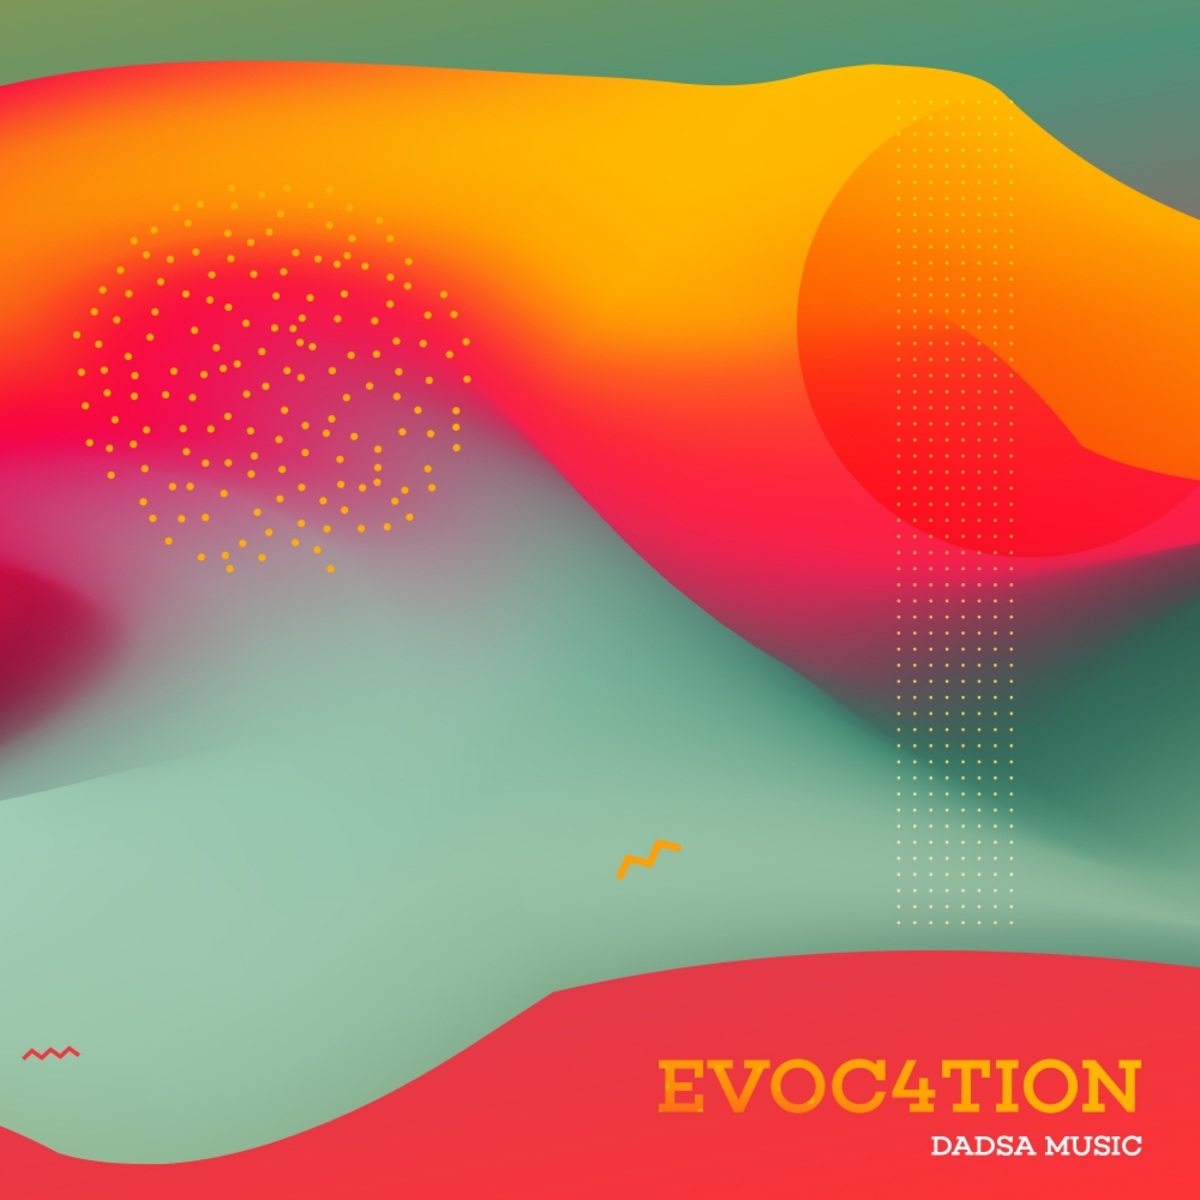 VA - Evocation, Vol. 4 / Dadsa Music